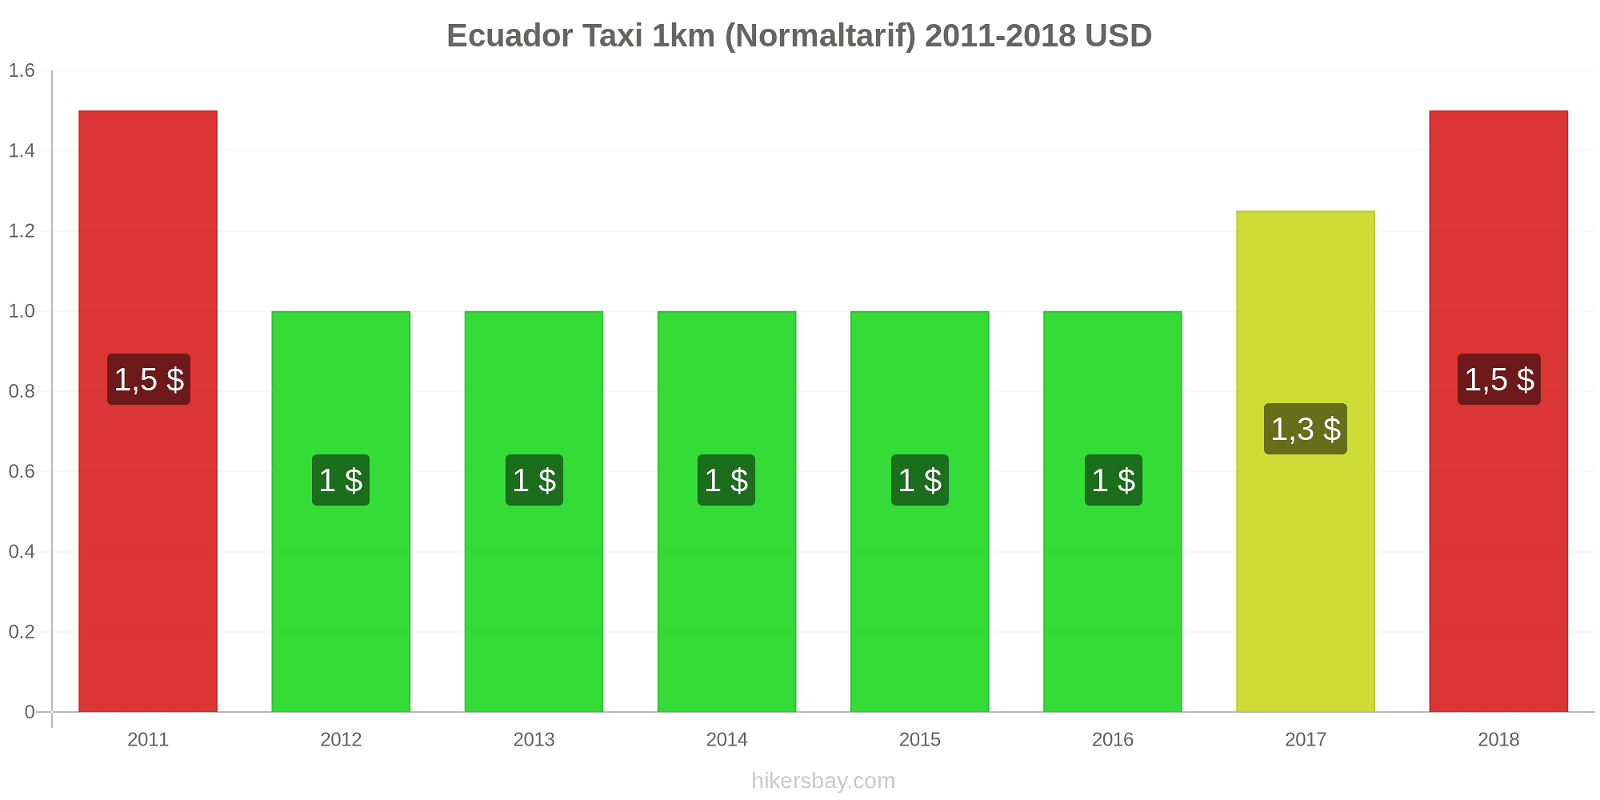 Ecuador Preisänderungen Taxi 1km (Normaltarif) hikersbay.com